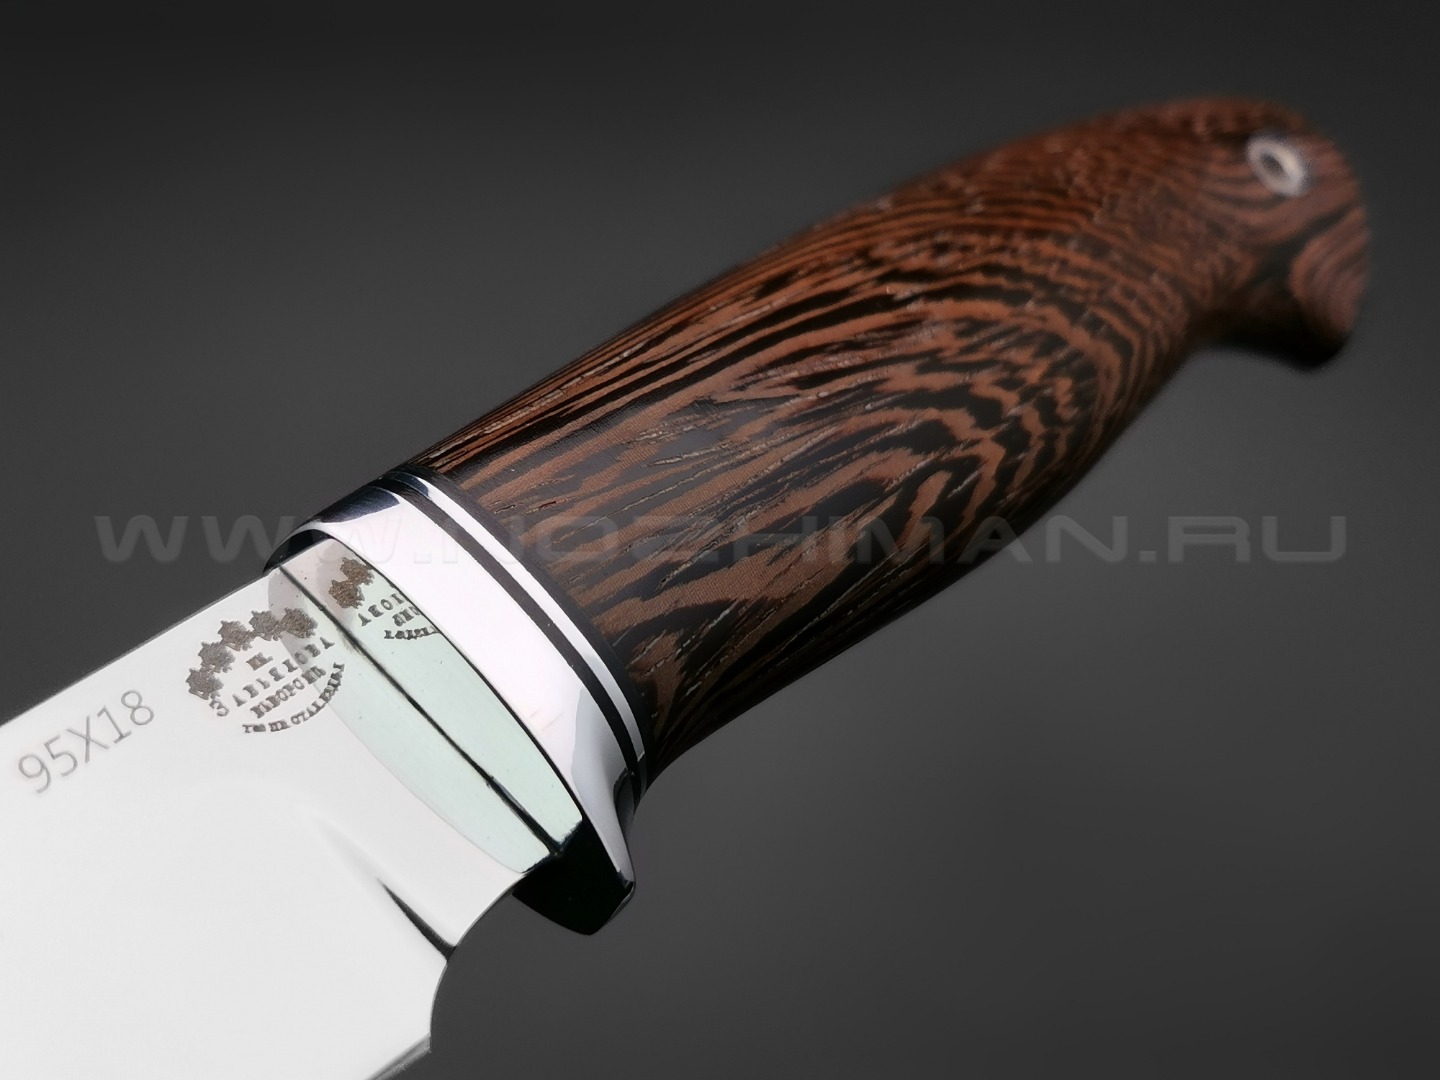 Нож "Атаман" сталь 95Х18, рукоять дерево венге (Товарищество Завьялова)